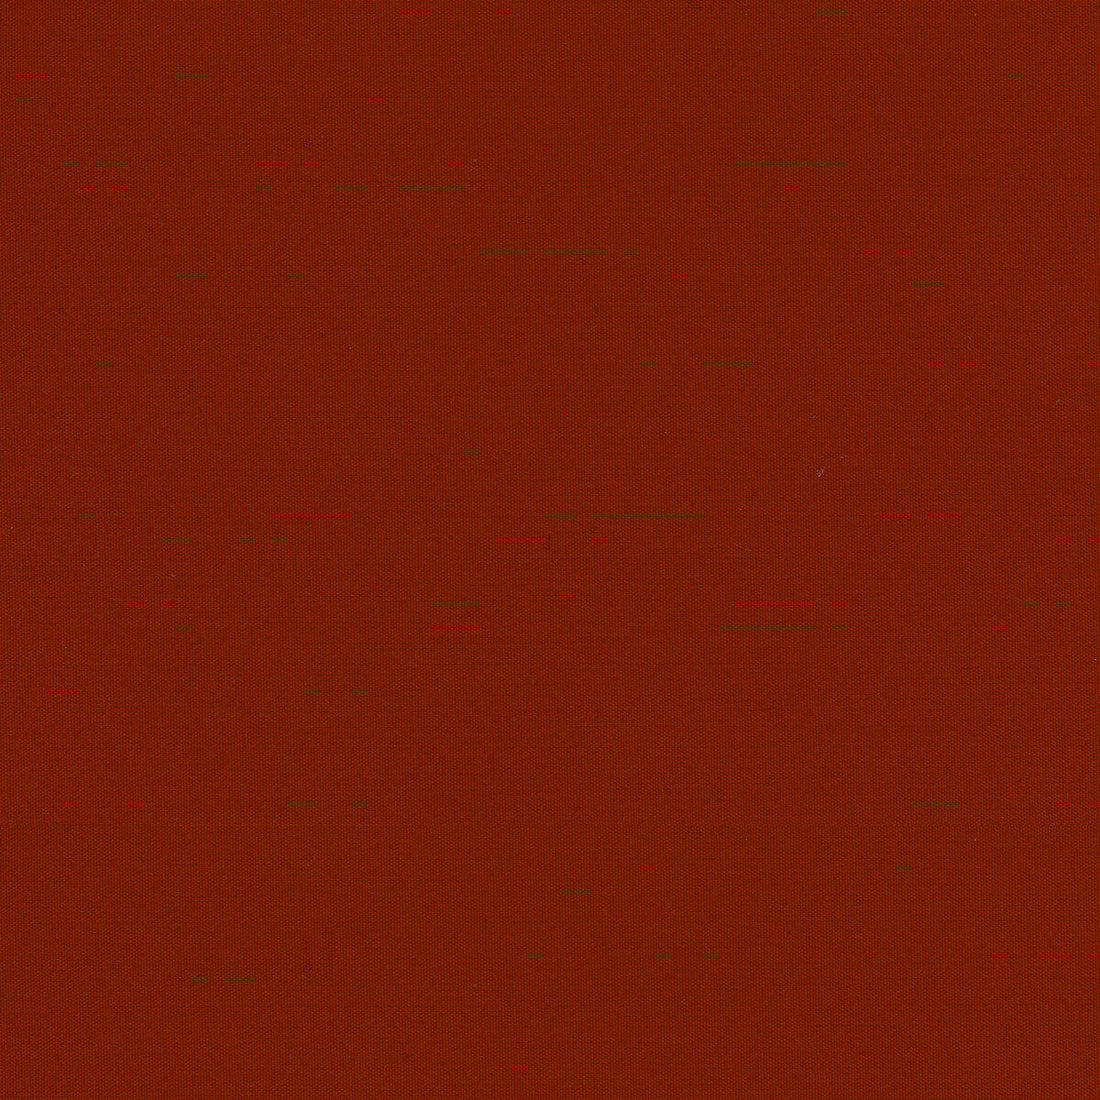 Adrien Cotton fabric in dark red color - pattern 8017121.919.0 - by Brunschwig &amp; Fils